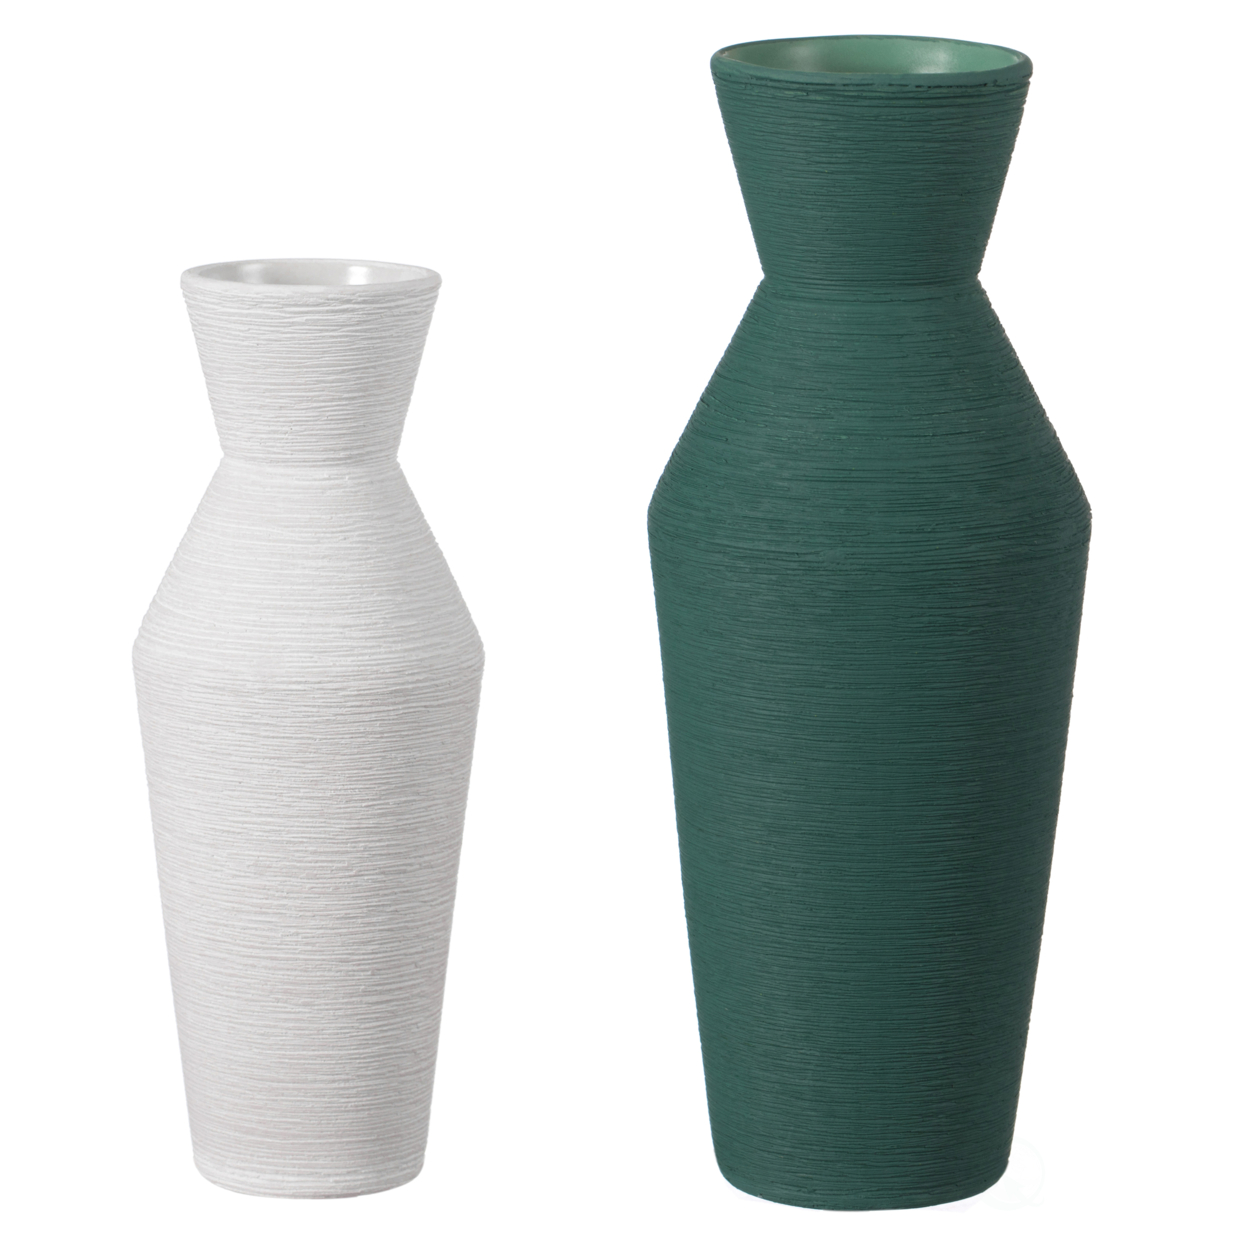 Decorative Ceramic Round Sharp Concaved Top Vase Centerpiece Table Vase - Green